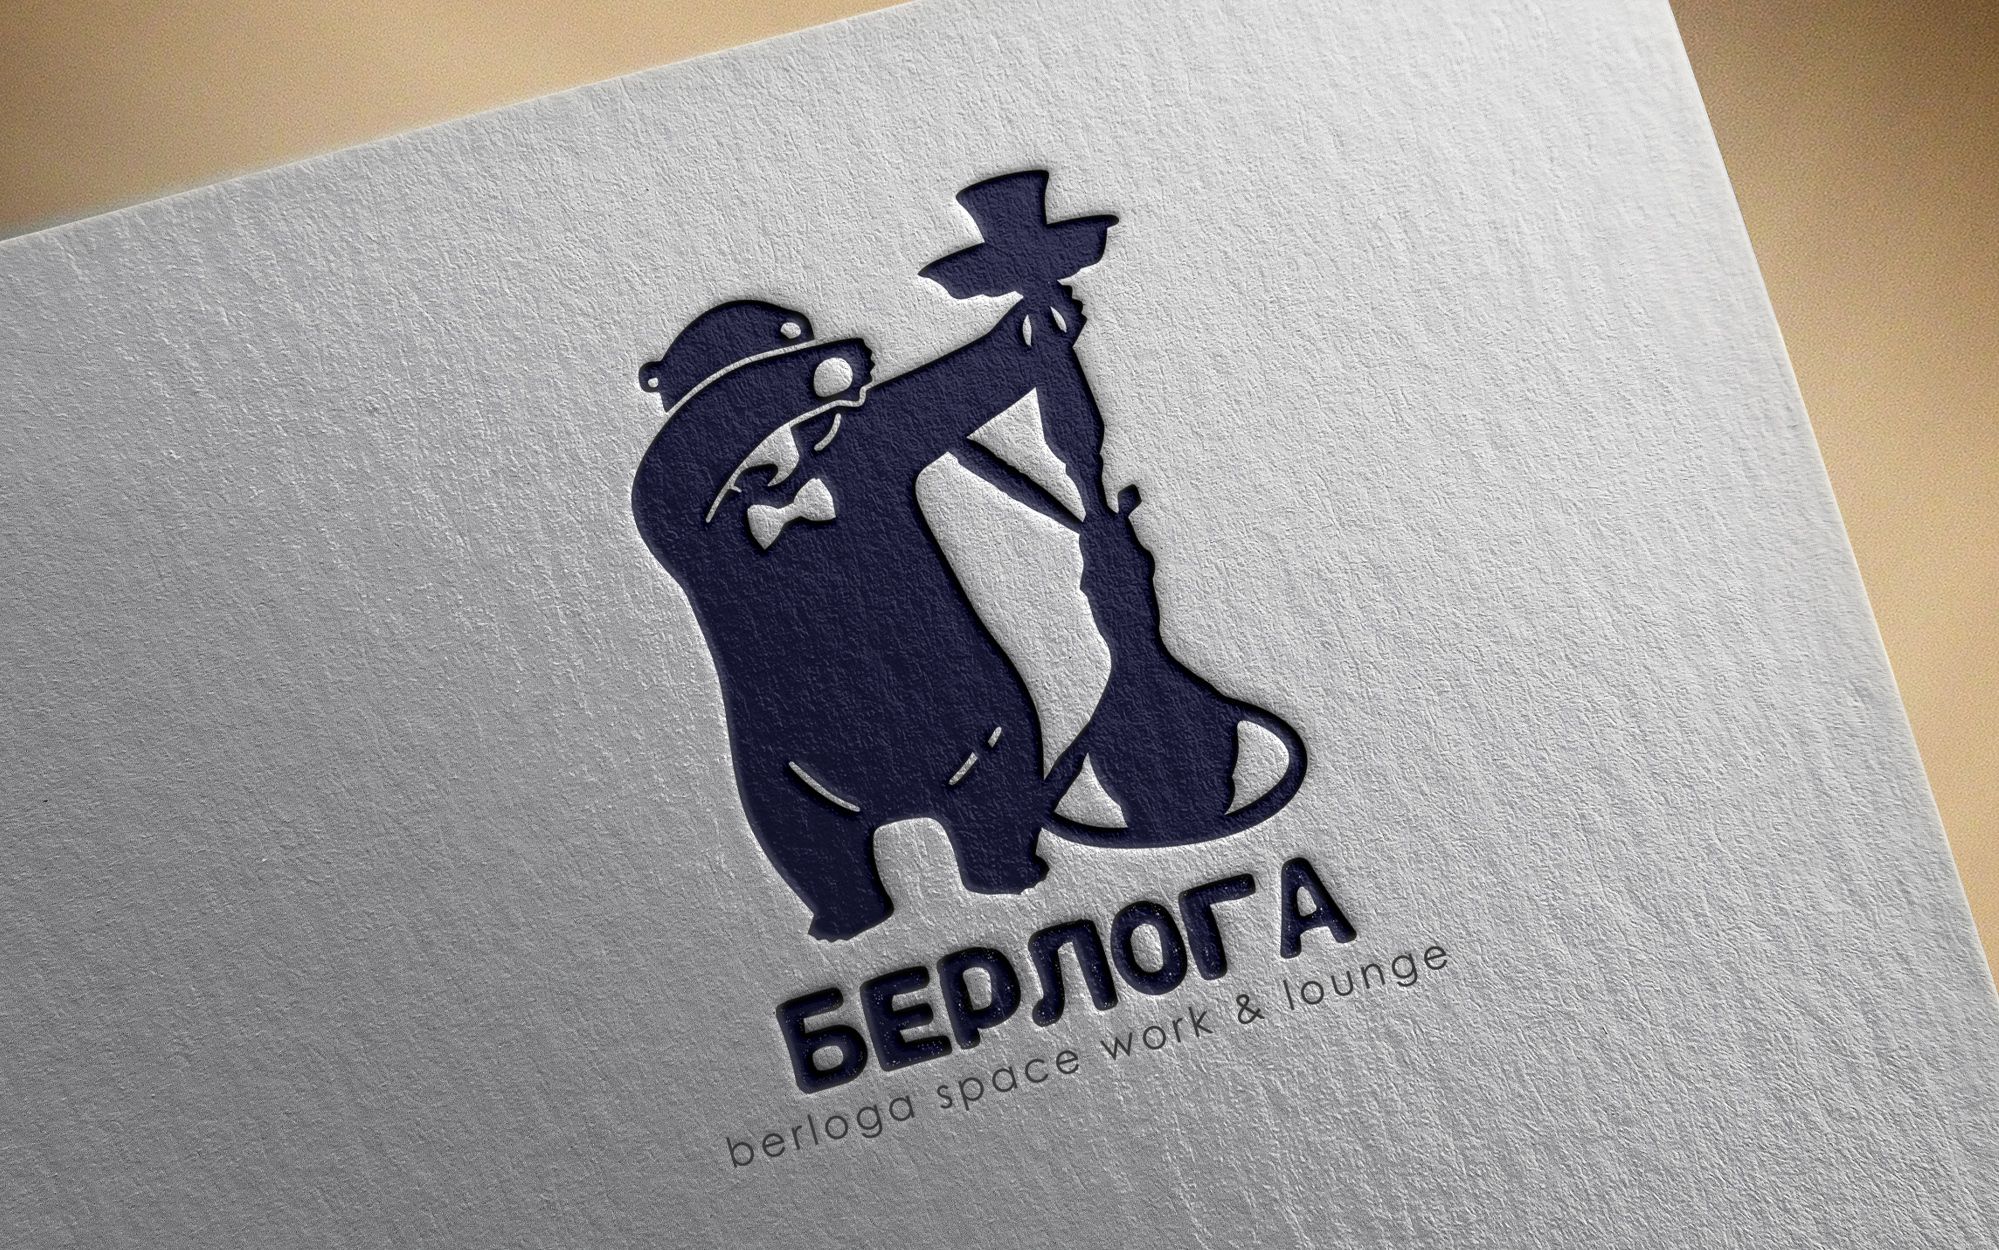 Логотип для Берлога / berloga space work &lounge - дизайнер Verstak